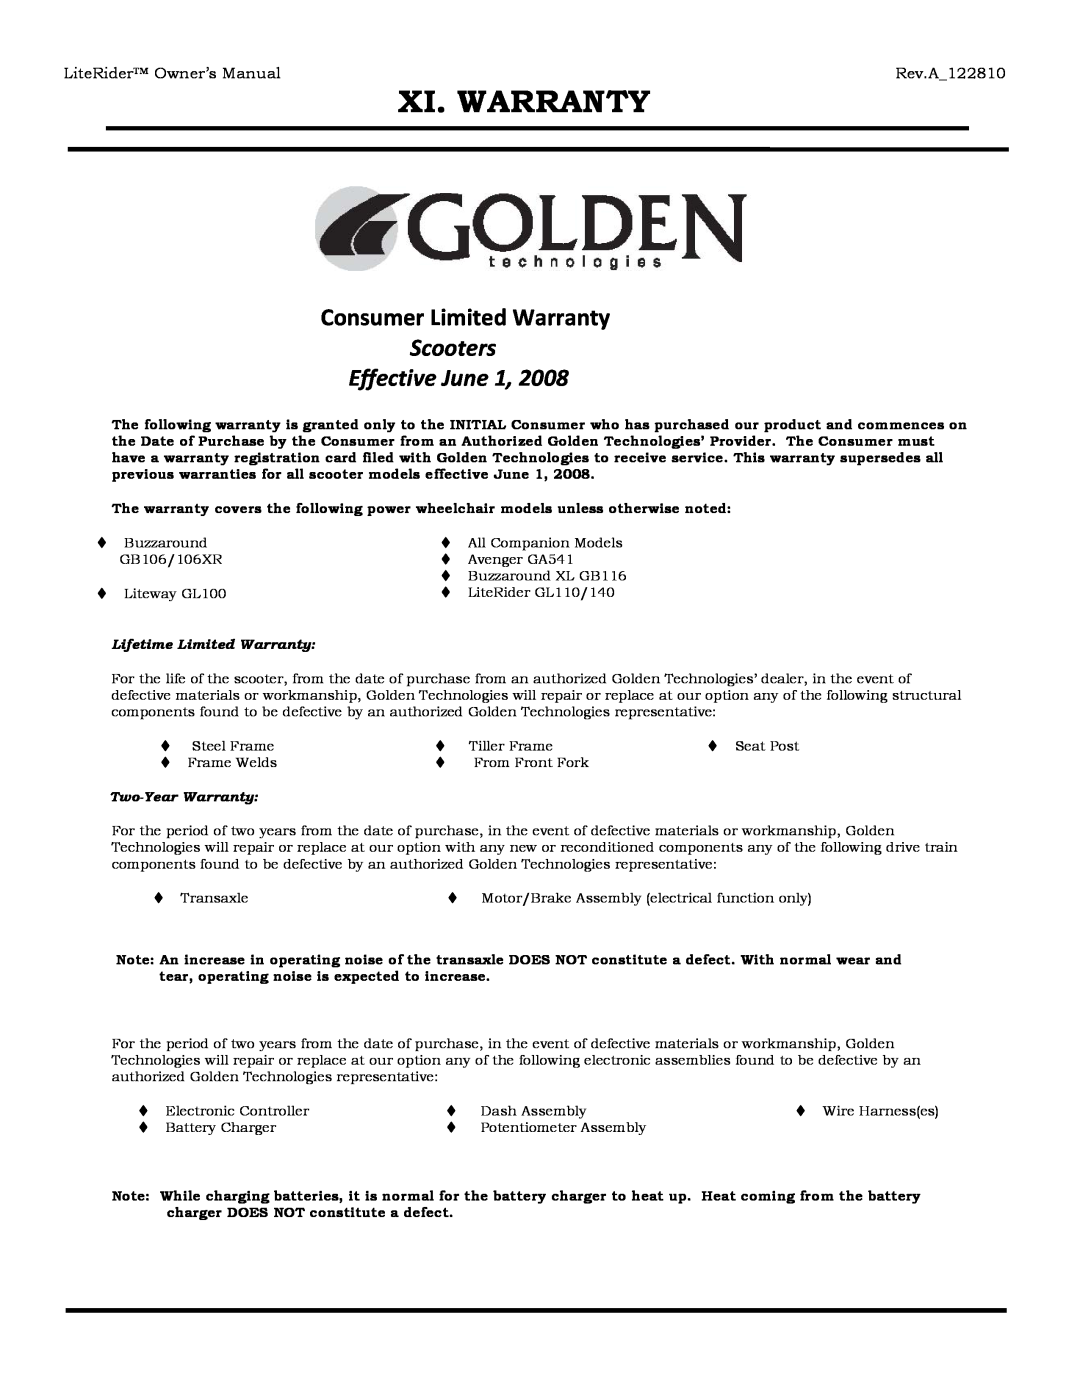 Golden Technologies GL110 Xi. Warranty, Consumer Limited Warranty, Scooters Effective June, LiteRider Owner’s Manual 